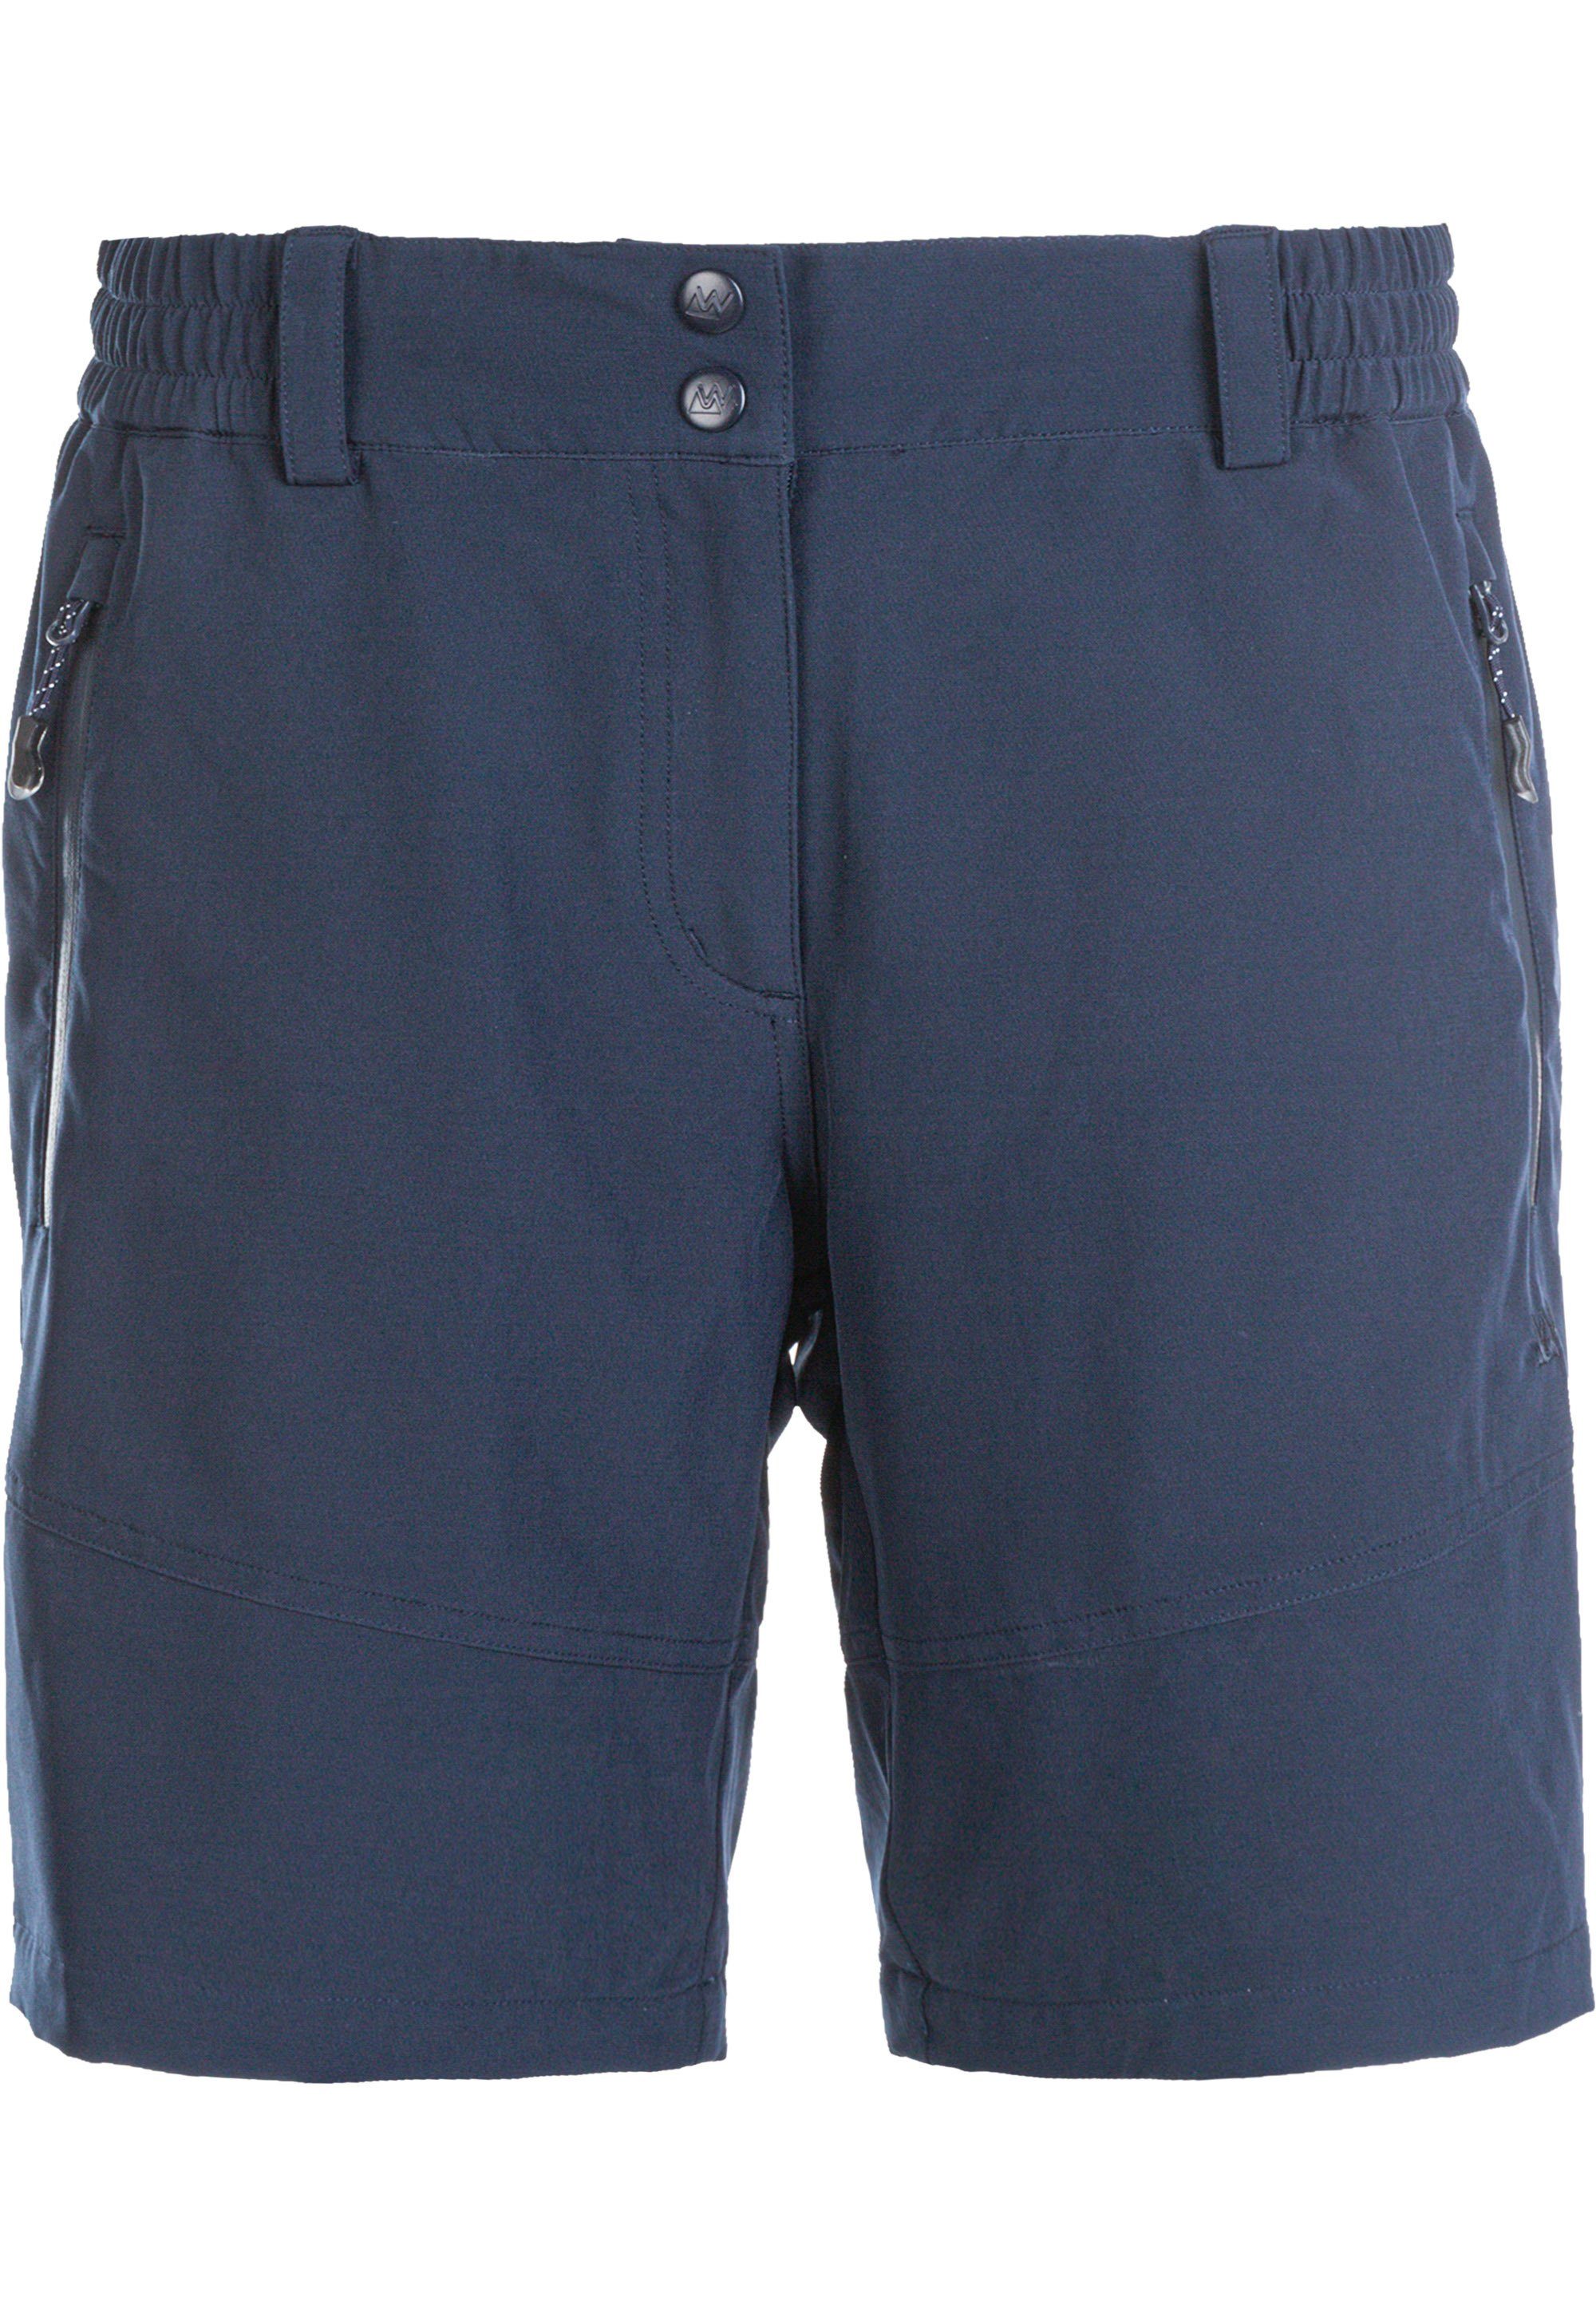 Funktionsstretch Shorts mit komfortablem LALA dunkelblau WHISTLER extra